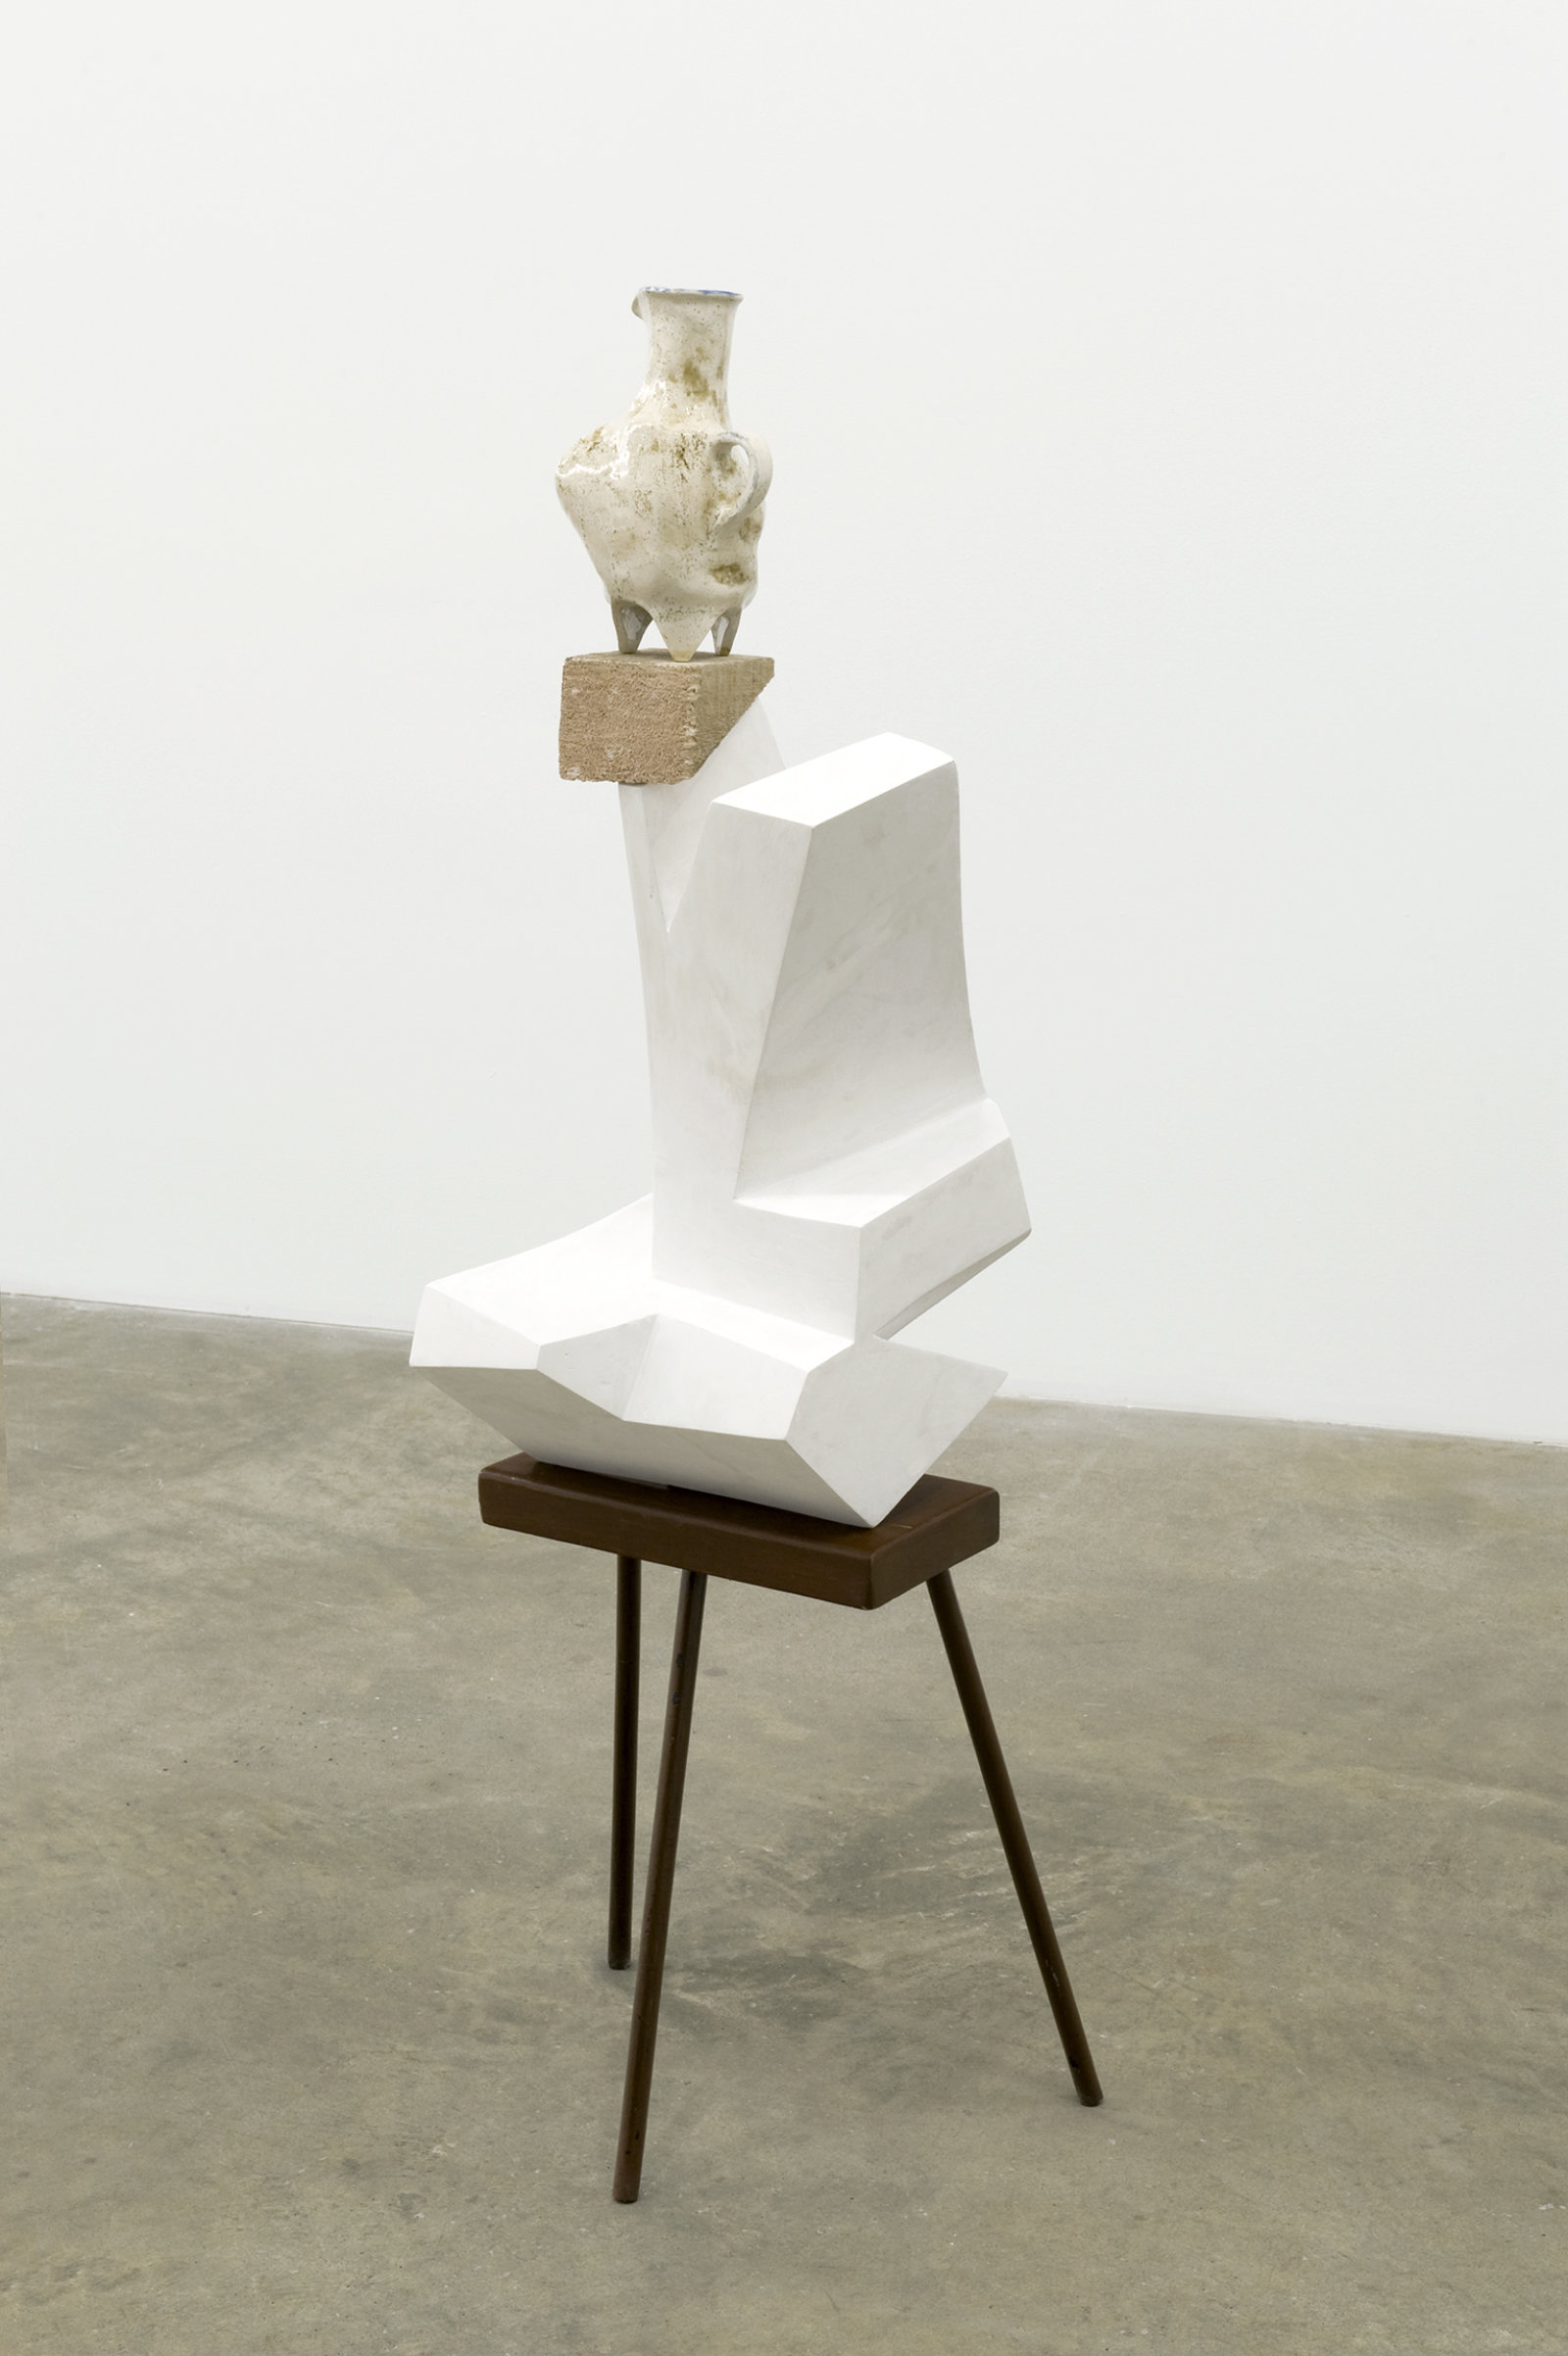 Damian Moppett, Abstracted Acrobat, 2011, plaster, stoneware, styrofoam, wood, 54 x 18 x 13 in. (137 x 46 x 33 cm)